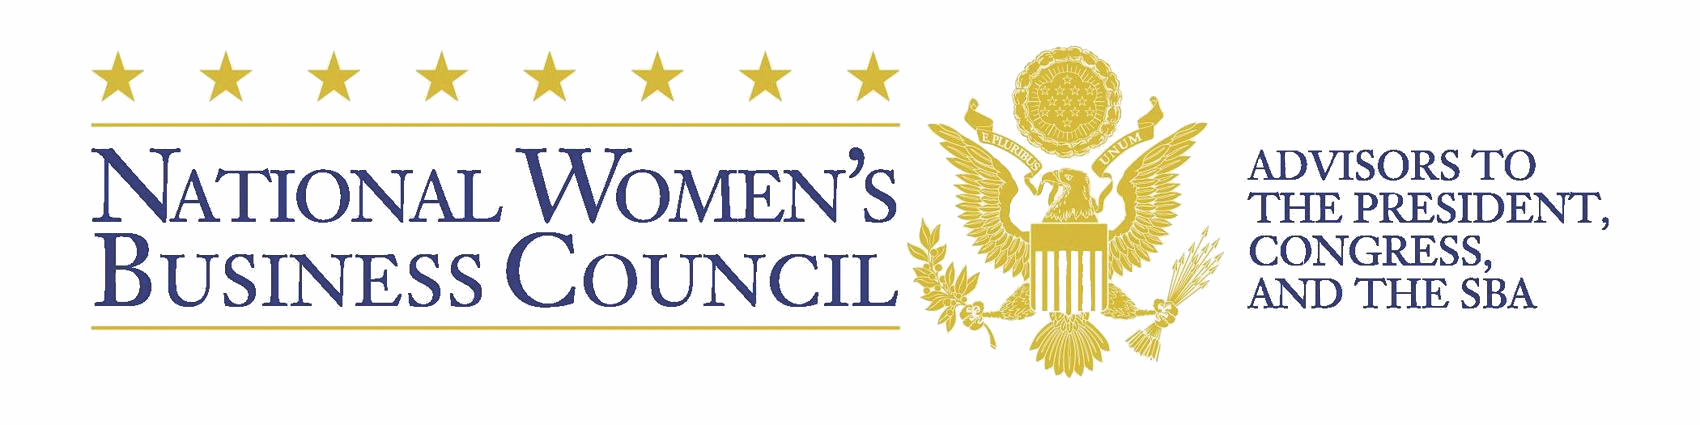 National Women's Business Council Logo